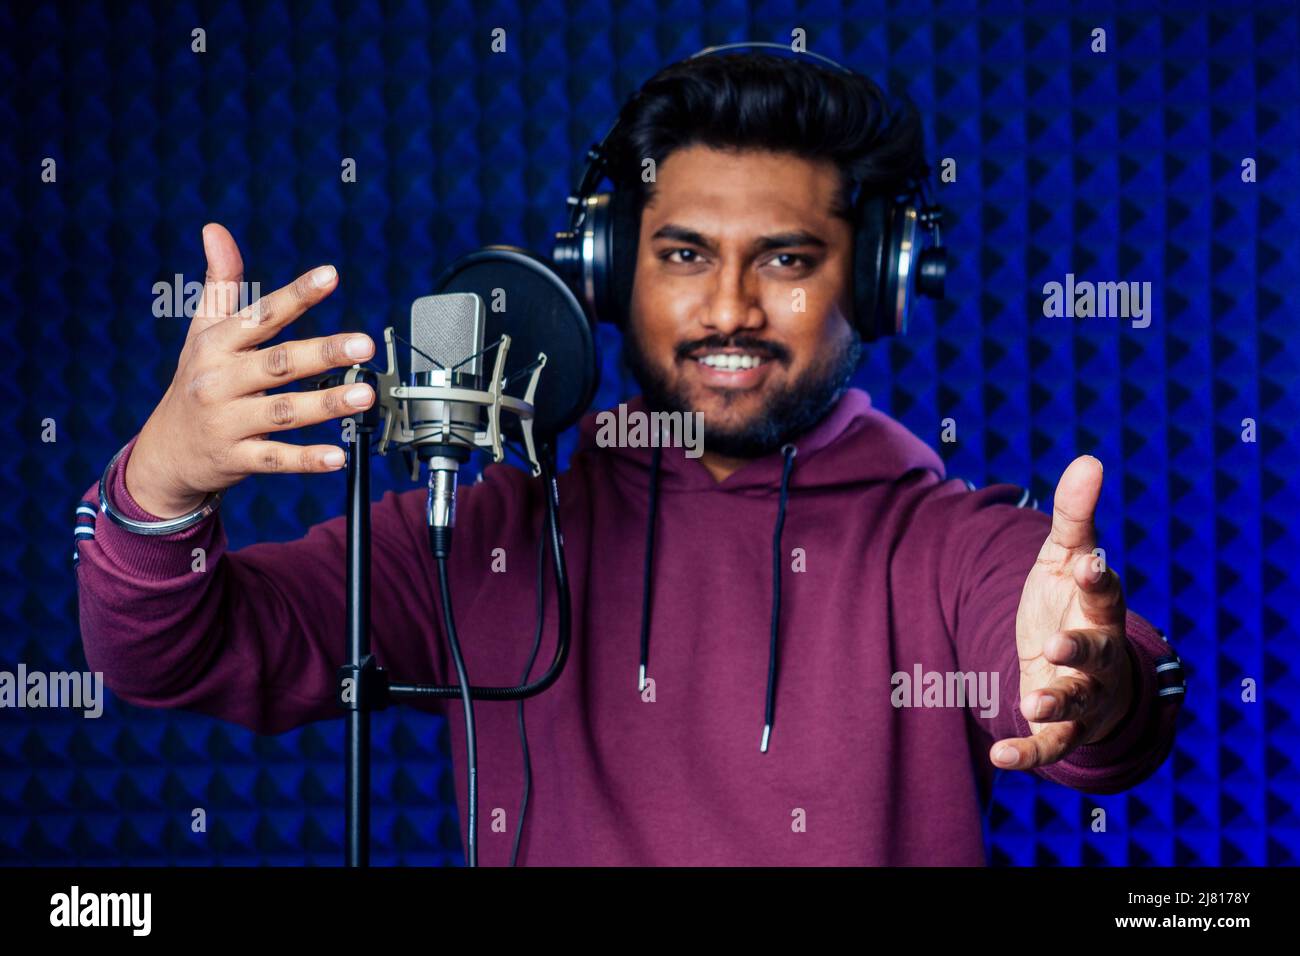 professional singing indian men headphones sound modern studio violet background recording song. Stock Photo